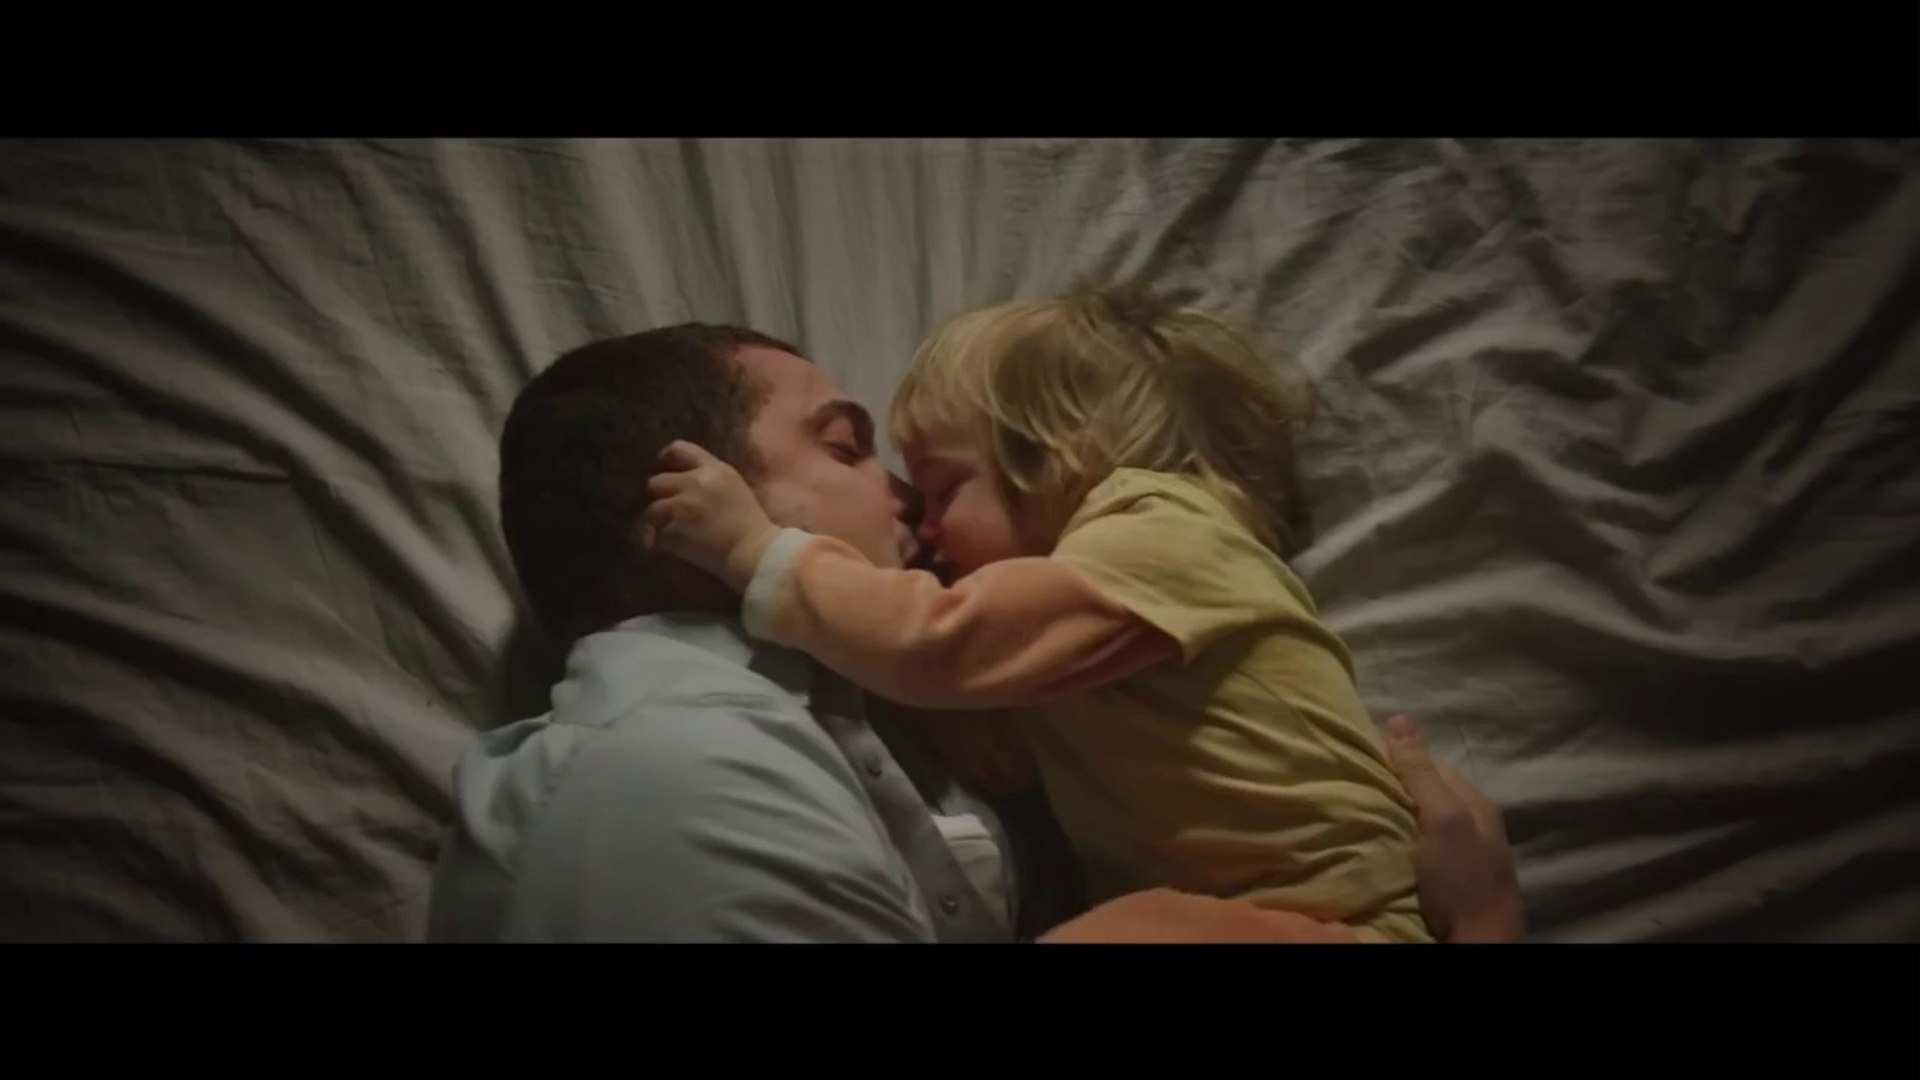 Love Official Trailer (2015) - Gaspar Noé Movie [HD] - Video Dailymotion